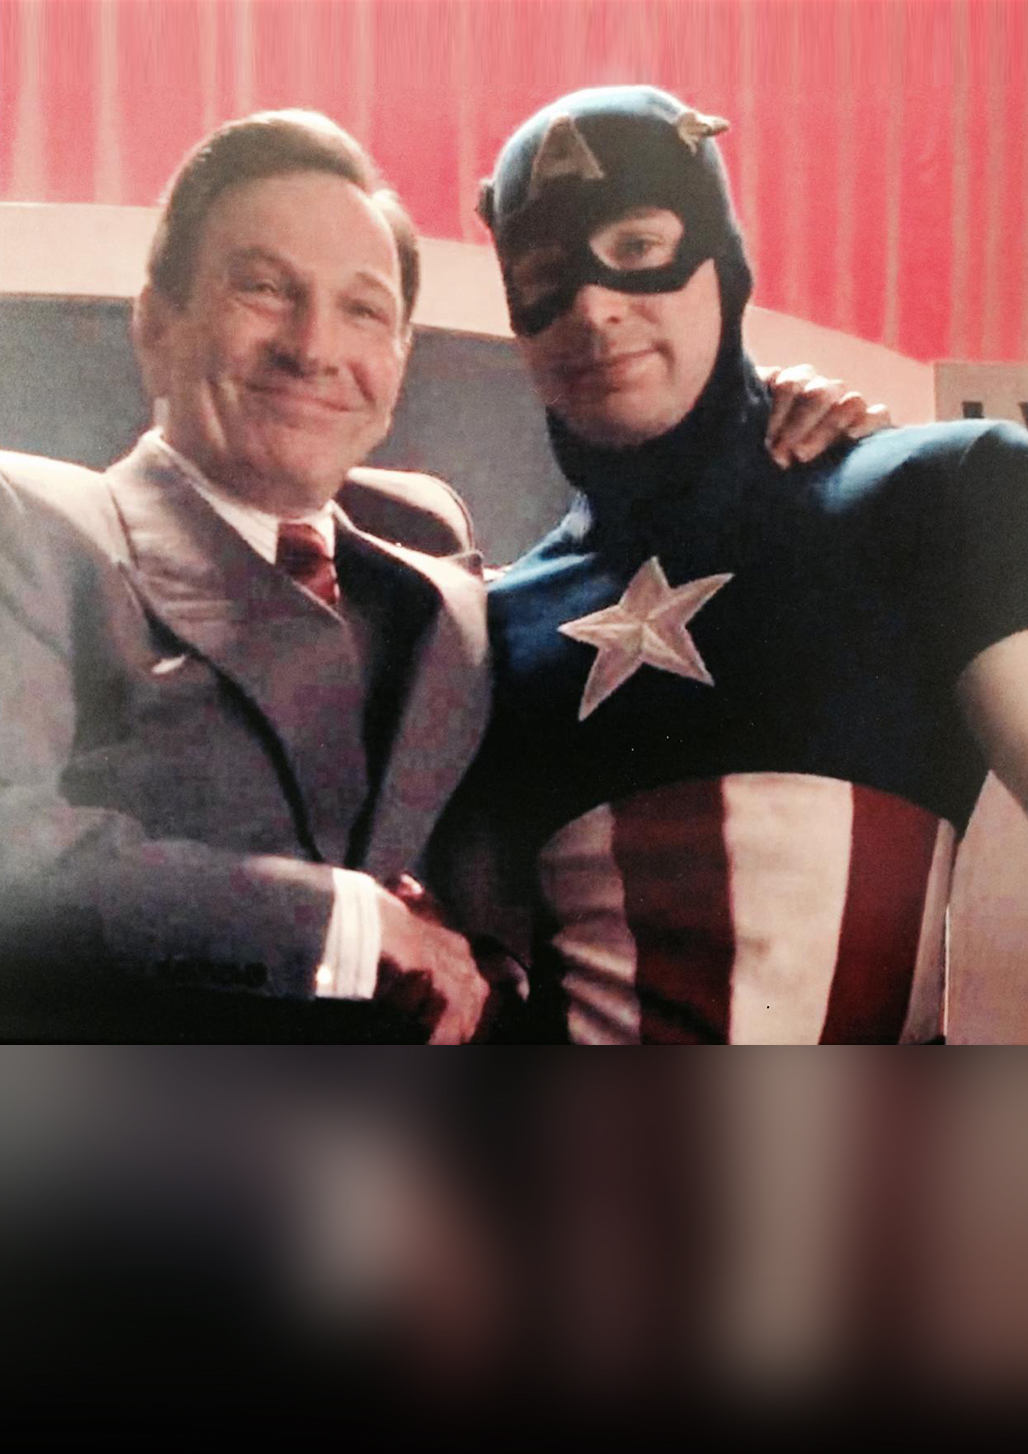 Senator Brandon with Captain America